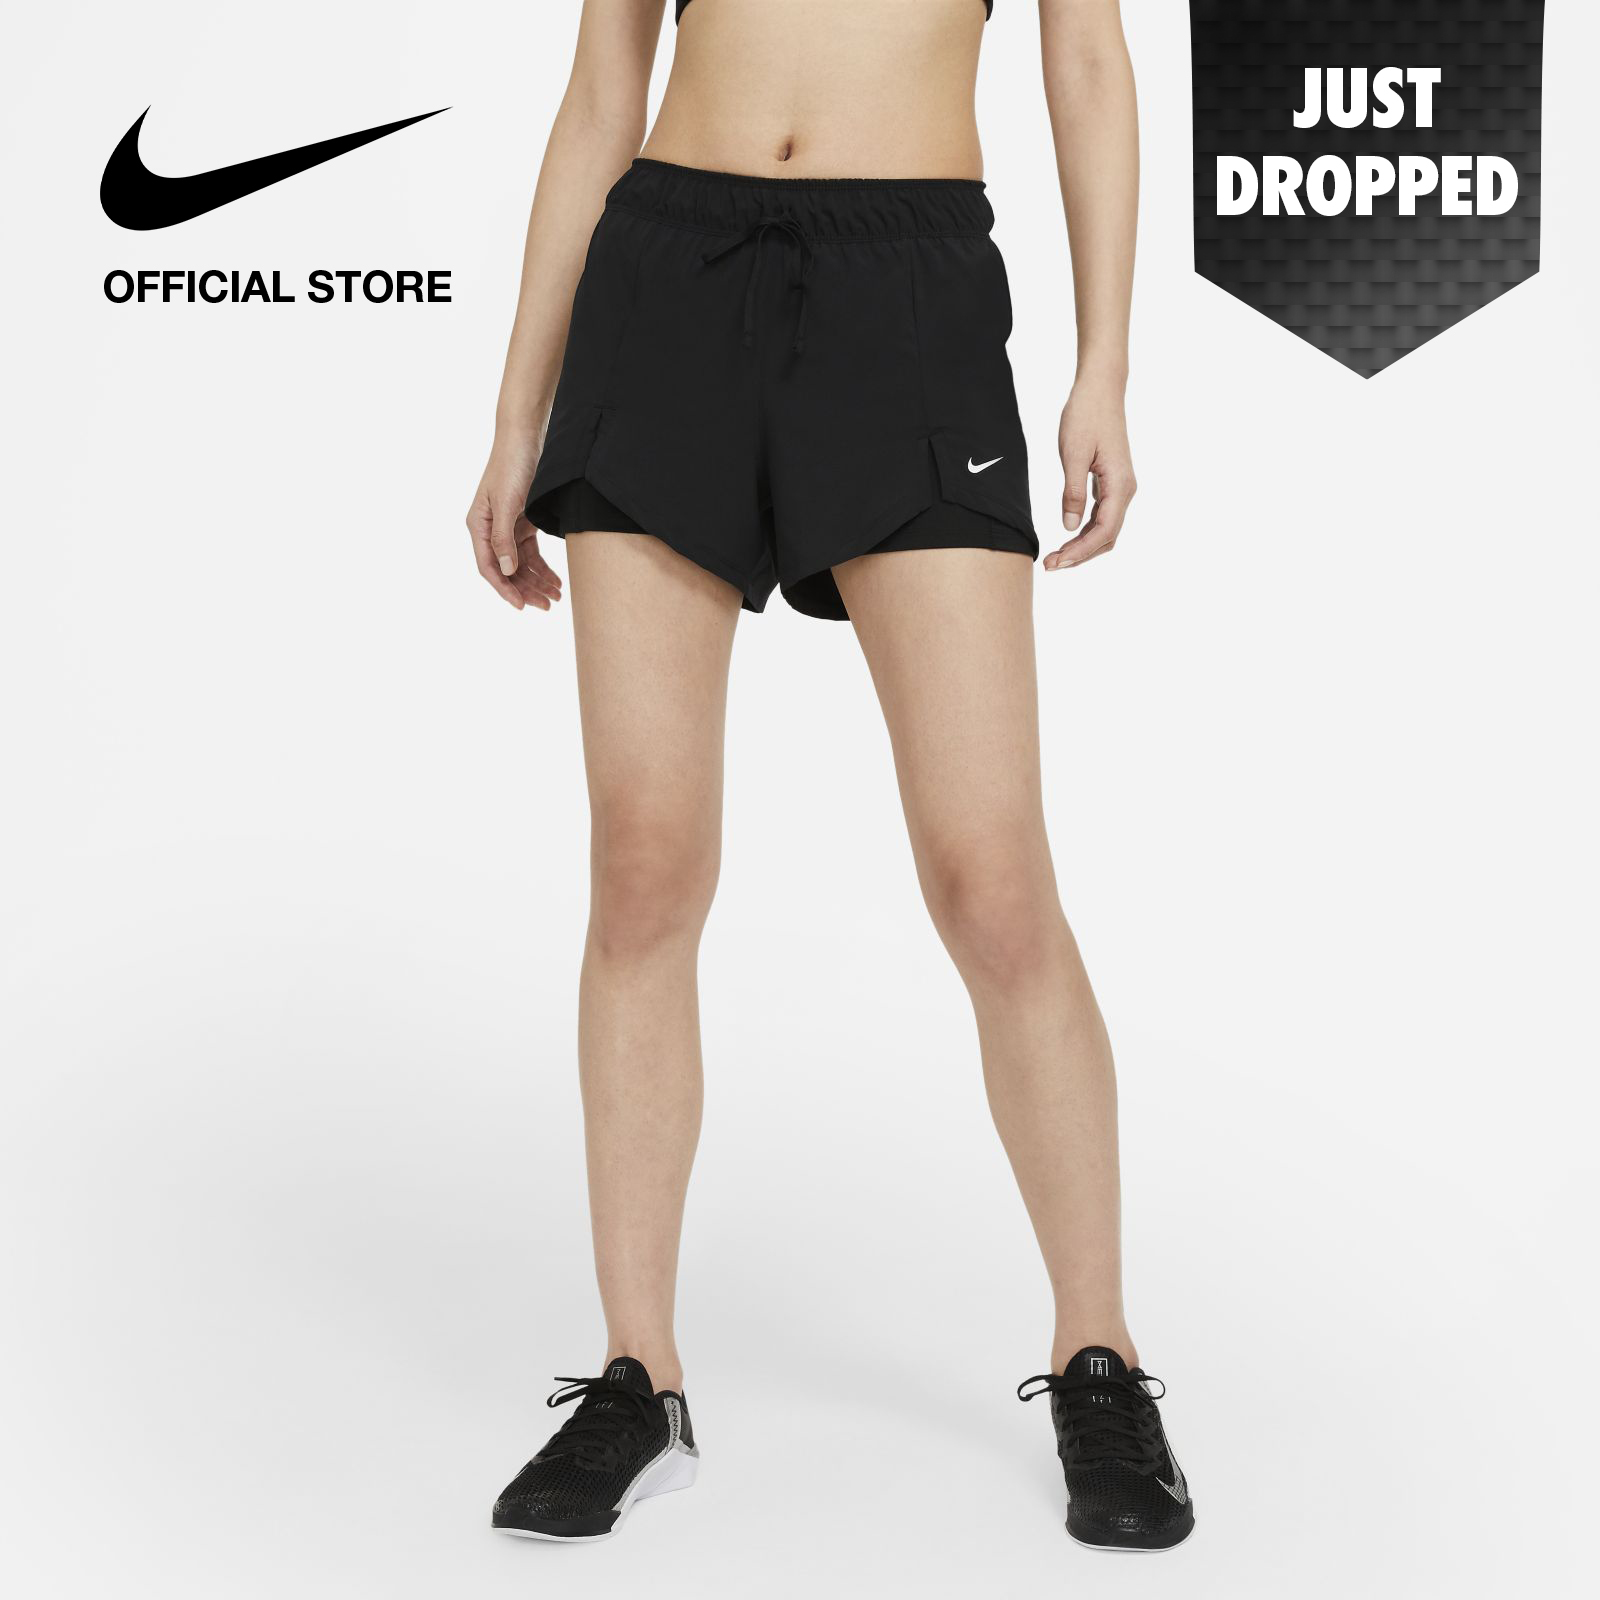 Nike Women's Flex Essential 2-in-1 Training Shorts - Black ไนกี้ กางเกงเทรนนิ่งขาสั้นผู้หญิง เฟล็ก เอสเซนเชียล 2 อิน 1 - สีดำ